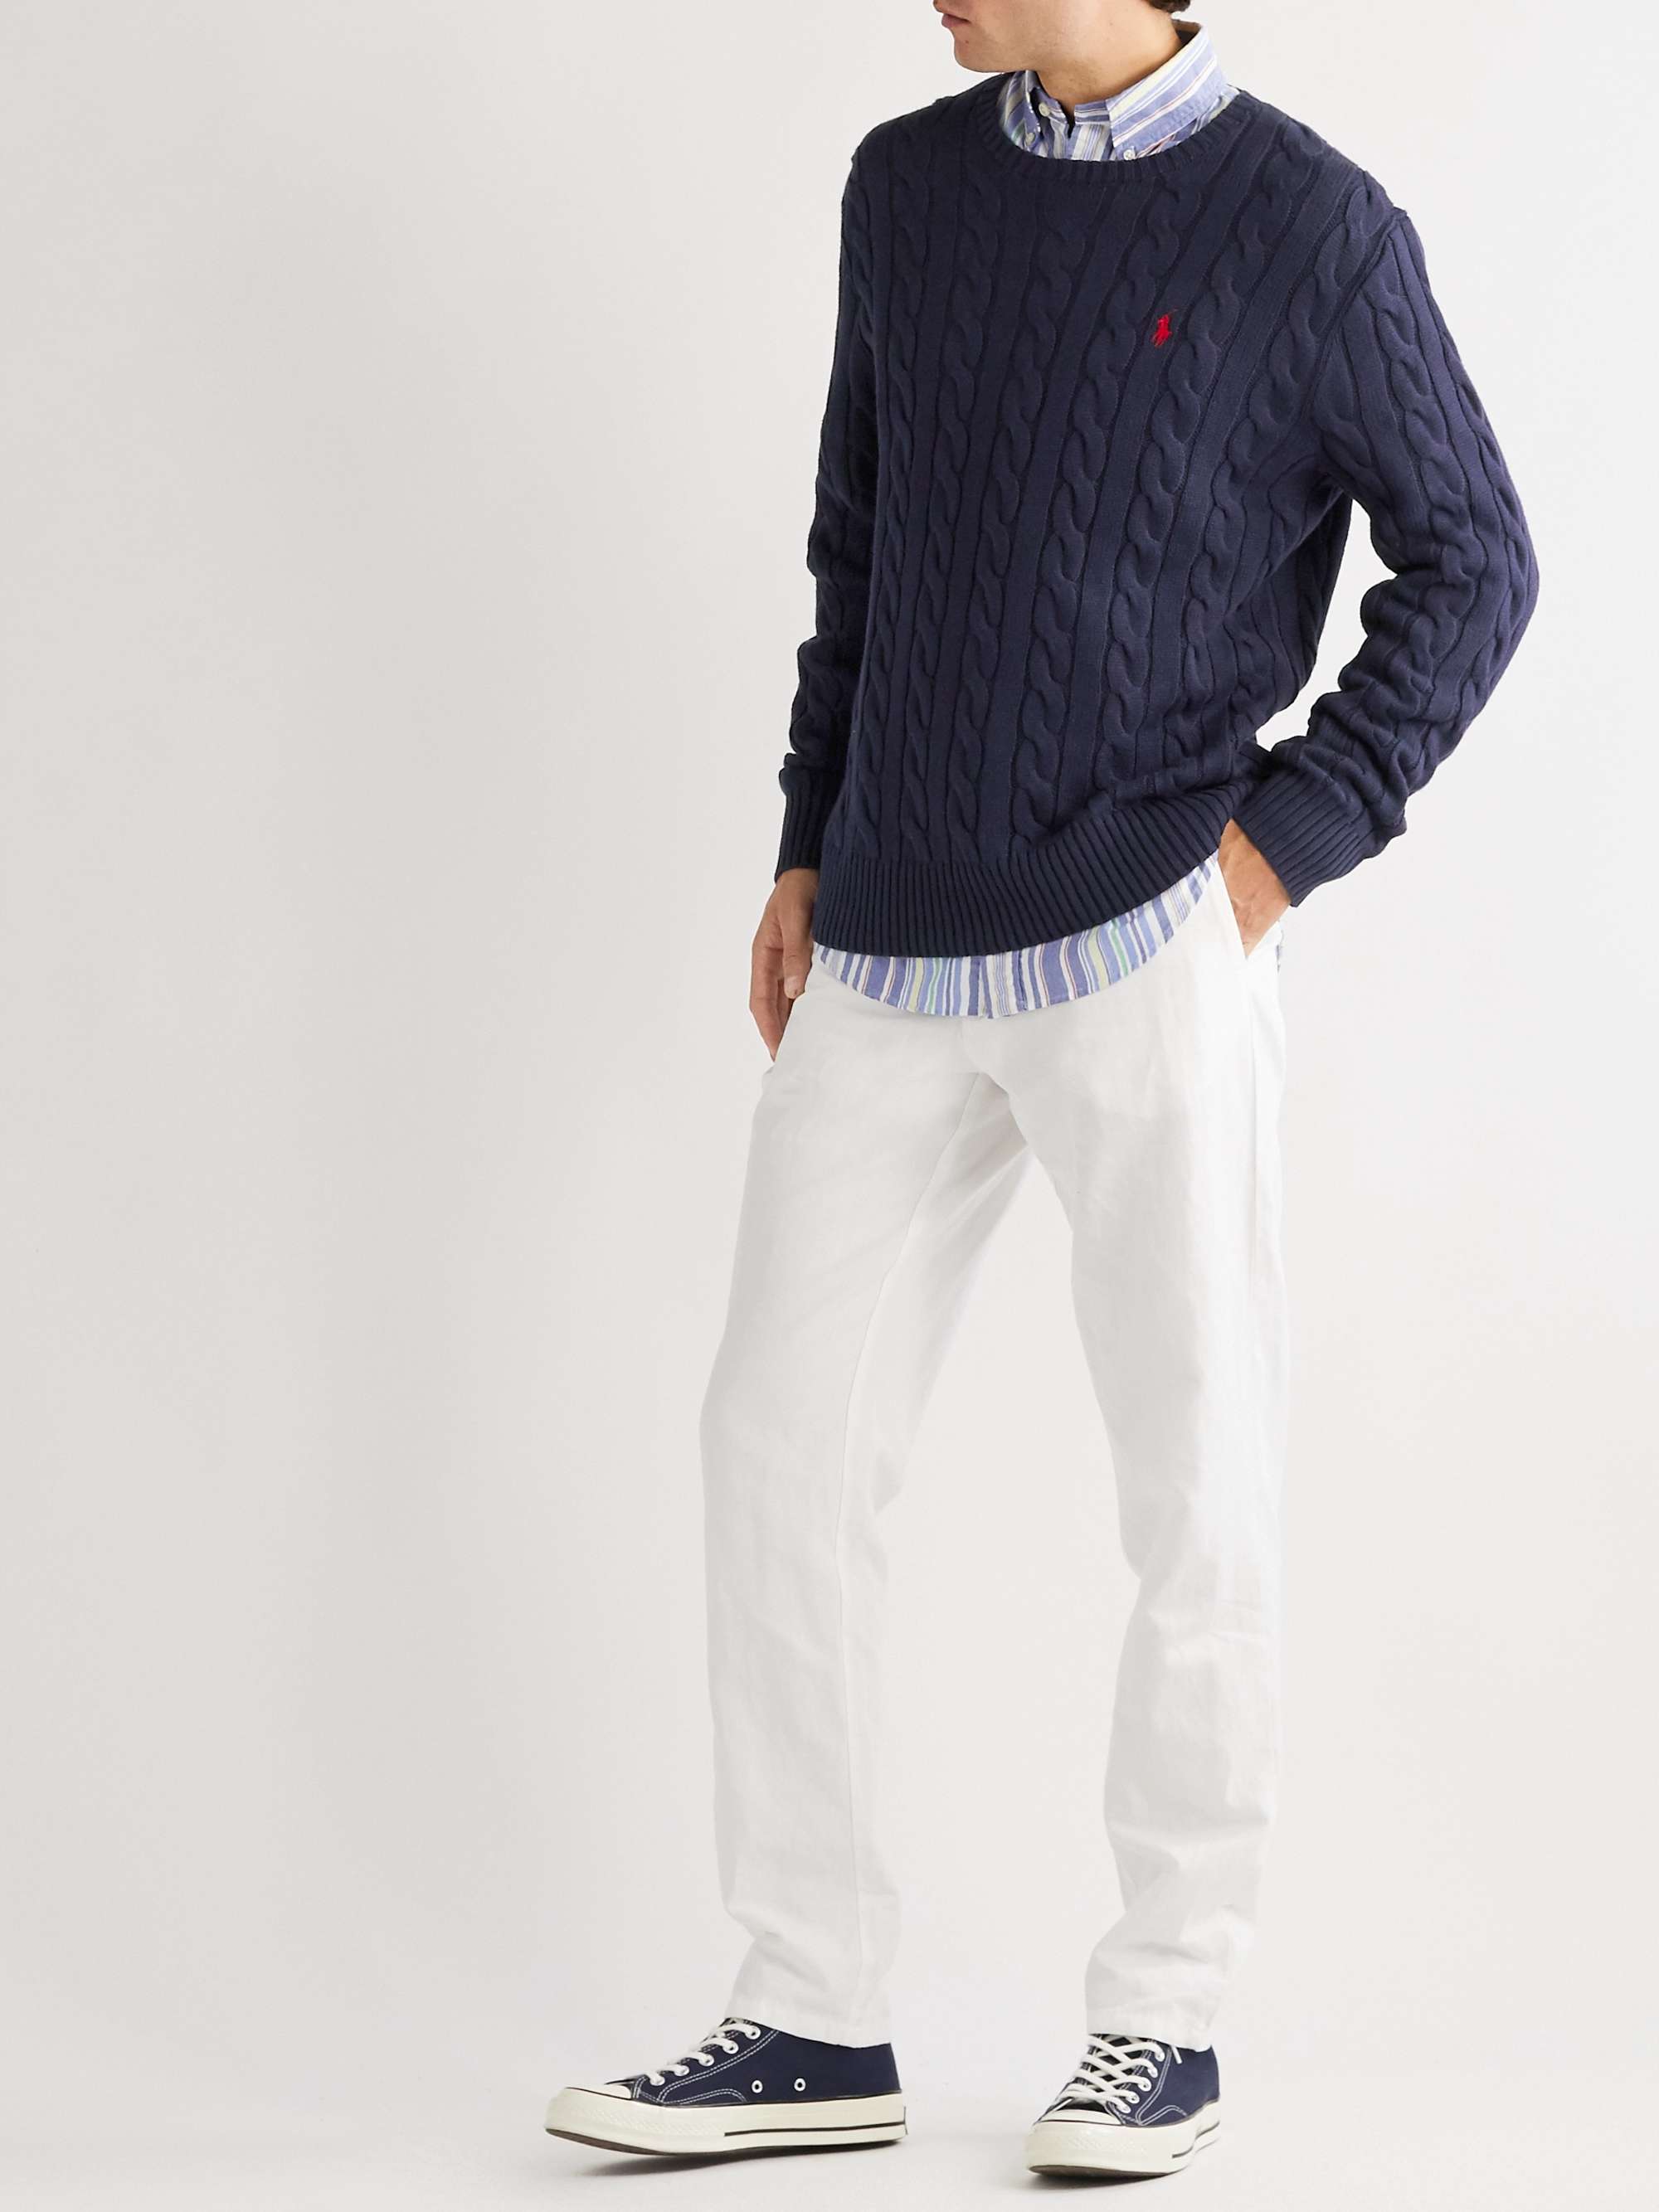 Navy Cable-Knit Cotton Sweater | POLO RALPH LAUREN | MR PORTER